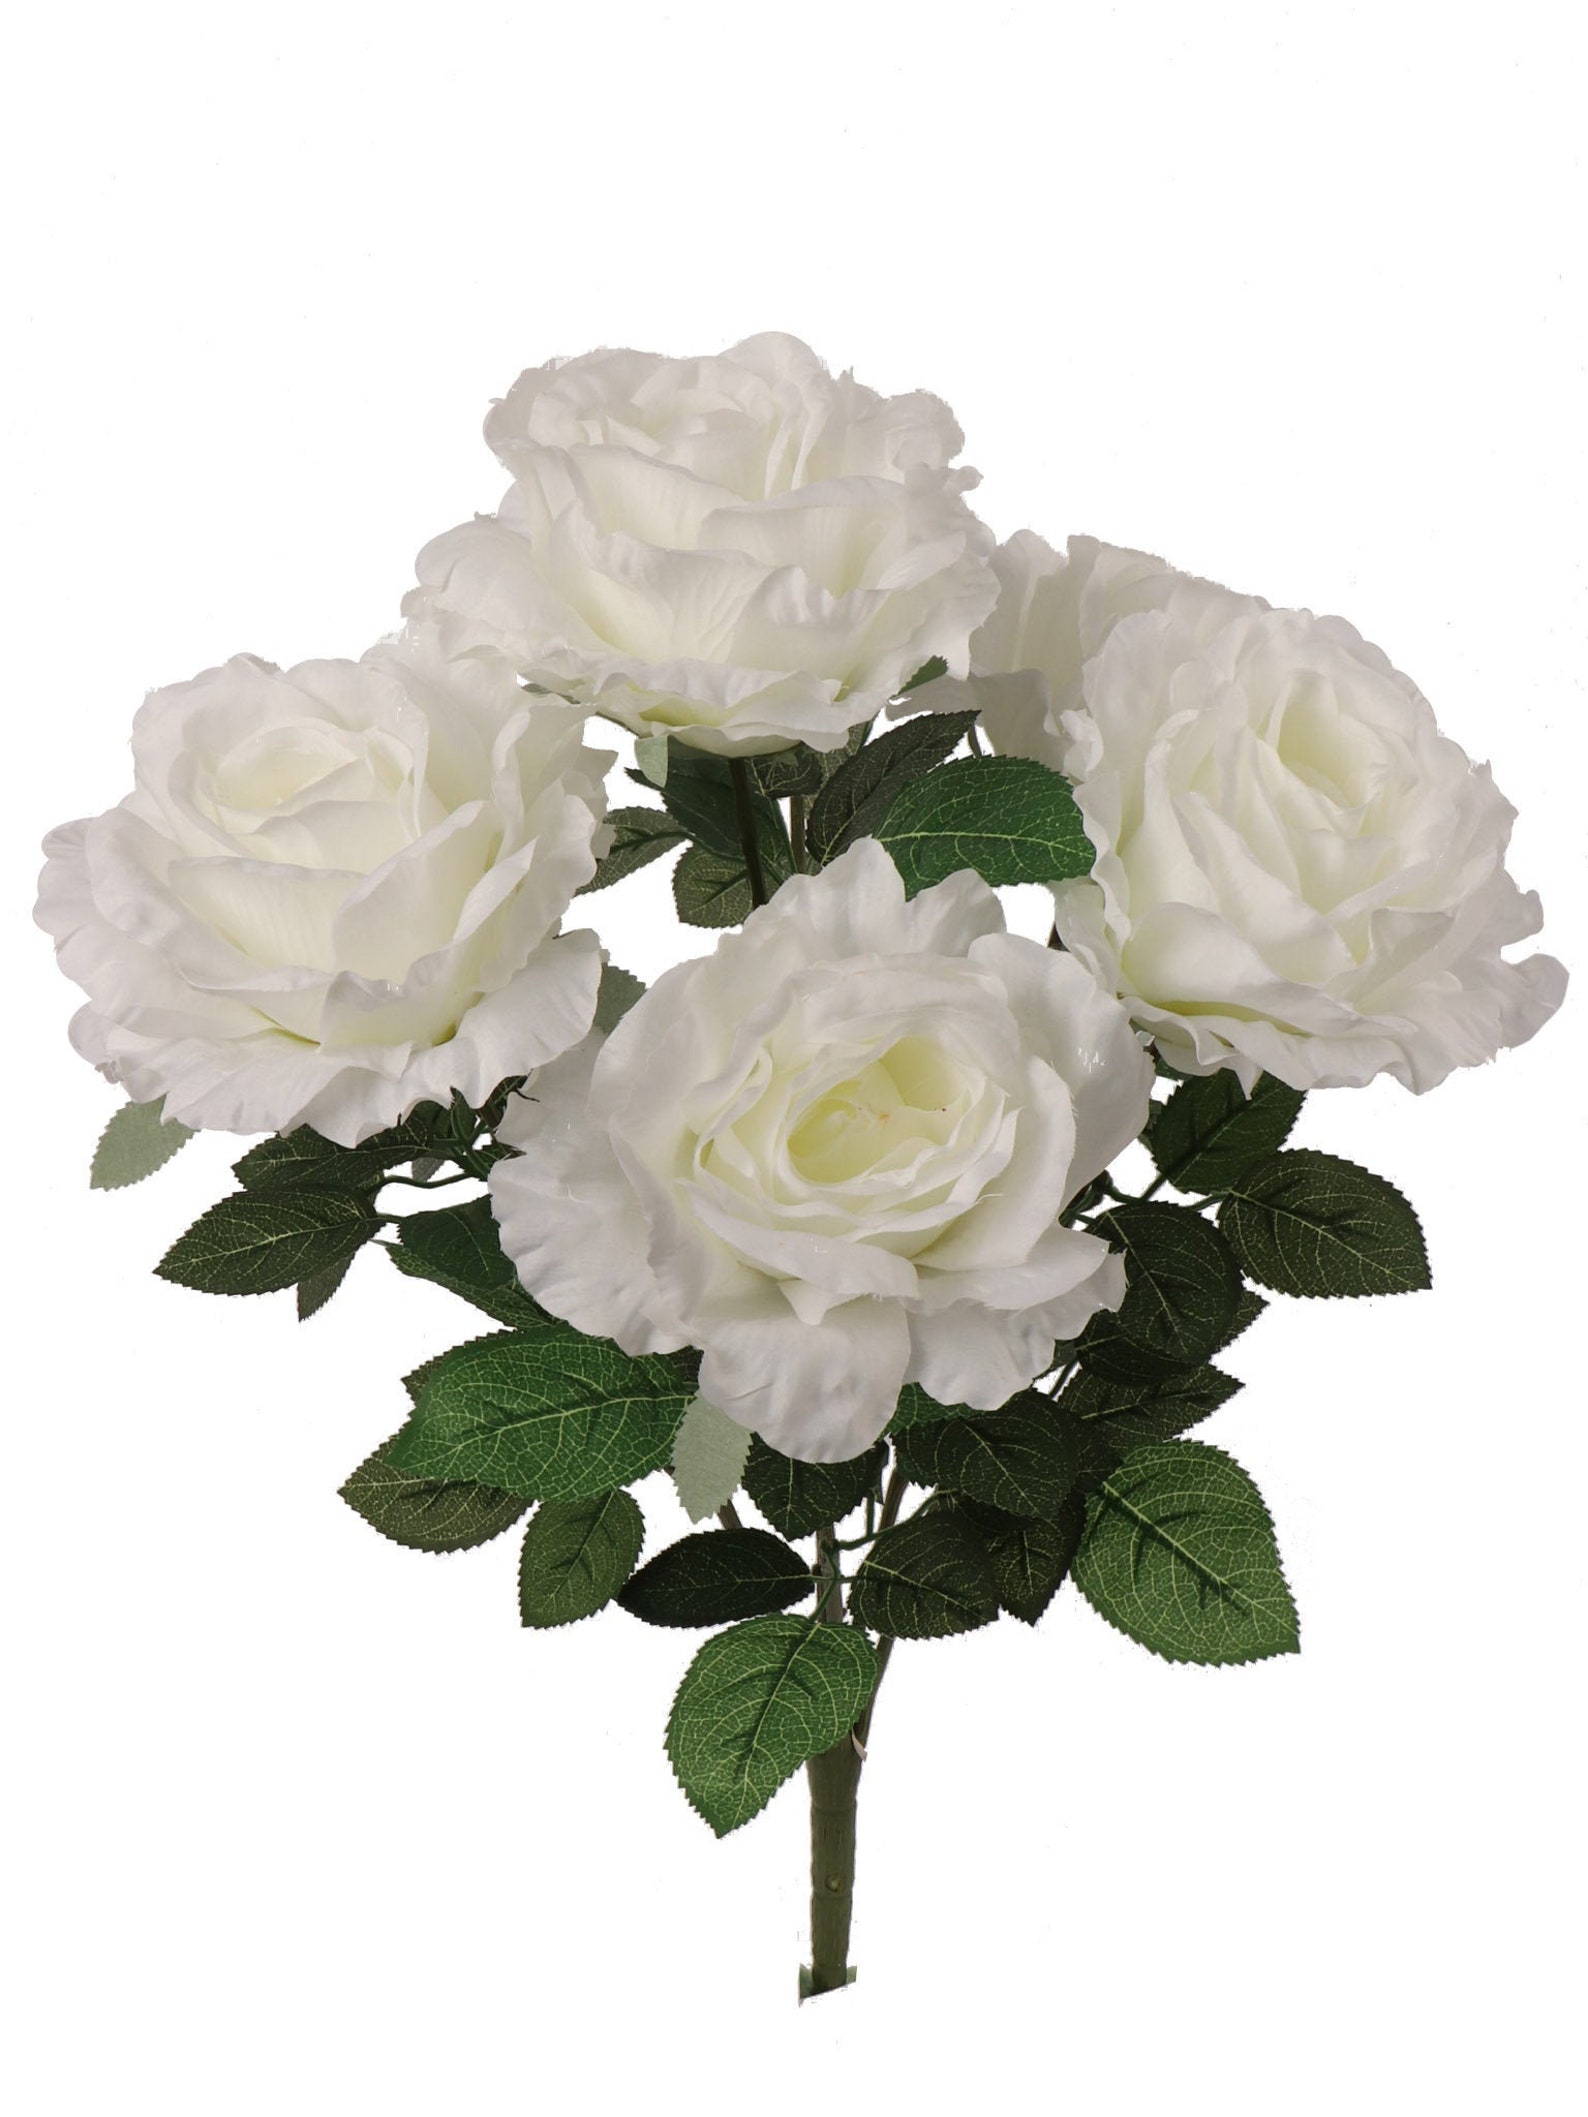 Silk Rose Bush 20 X 13 with 7 White Silk Flowers | Etsy